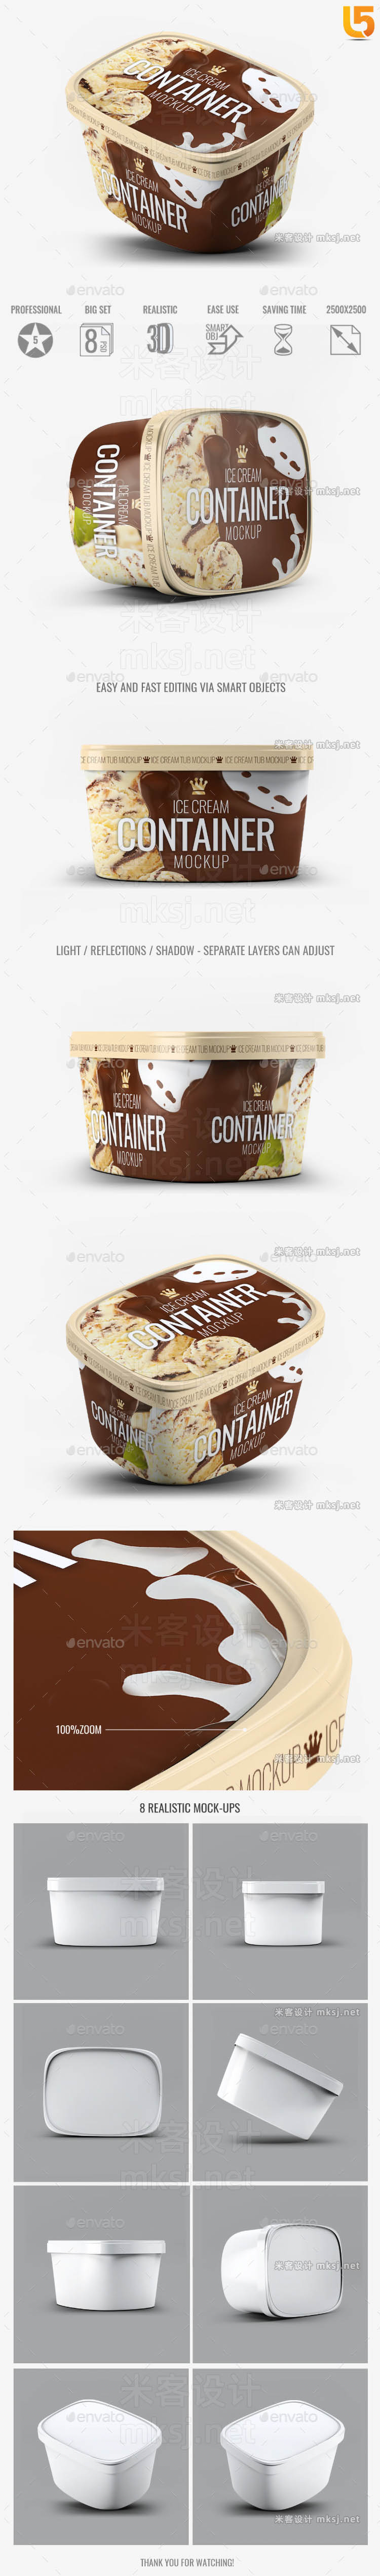 PSD高档方形冰淇淋品牌包装VI贴图设计模板